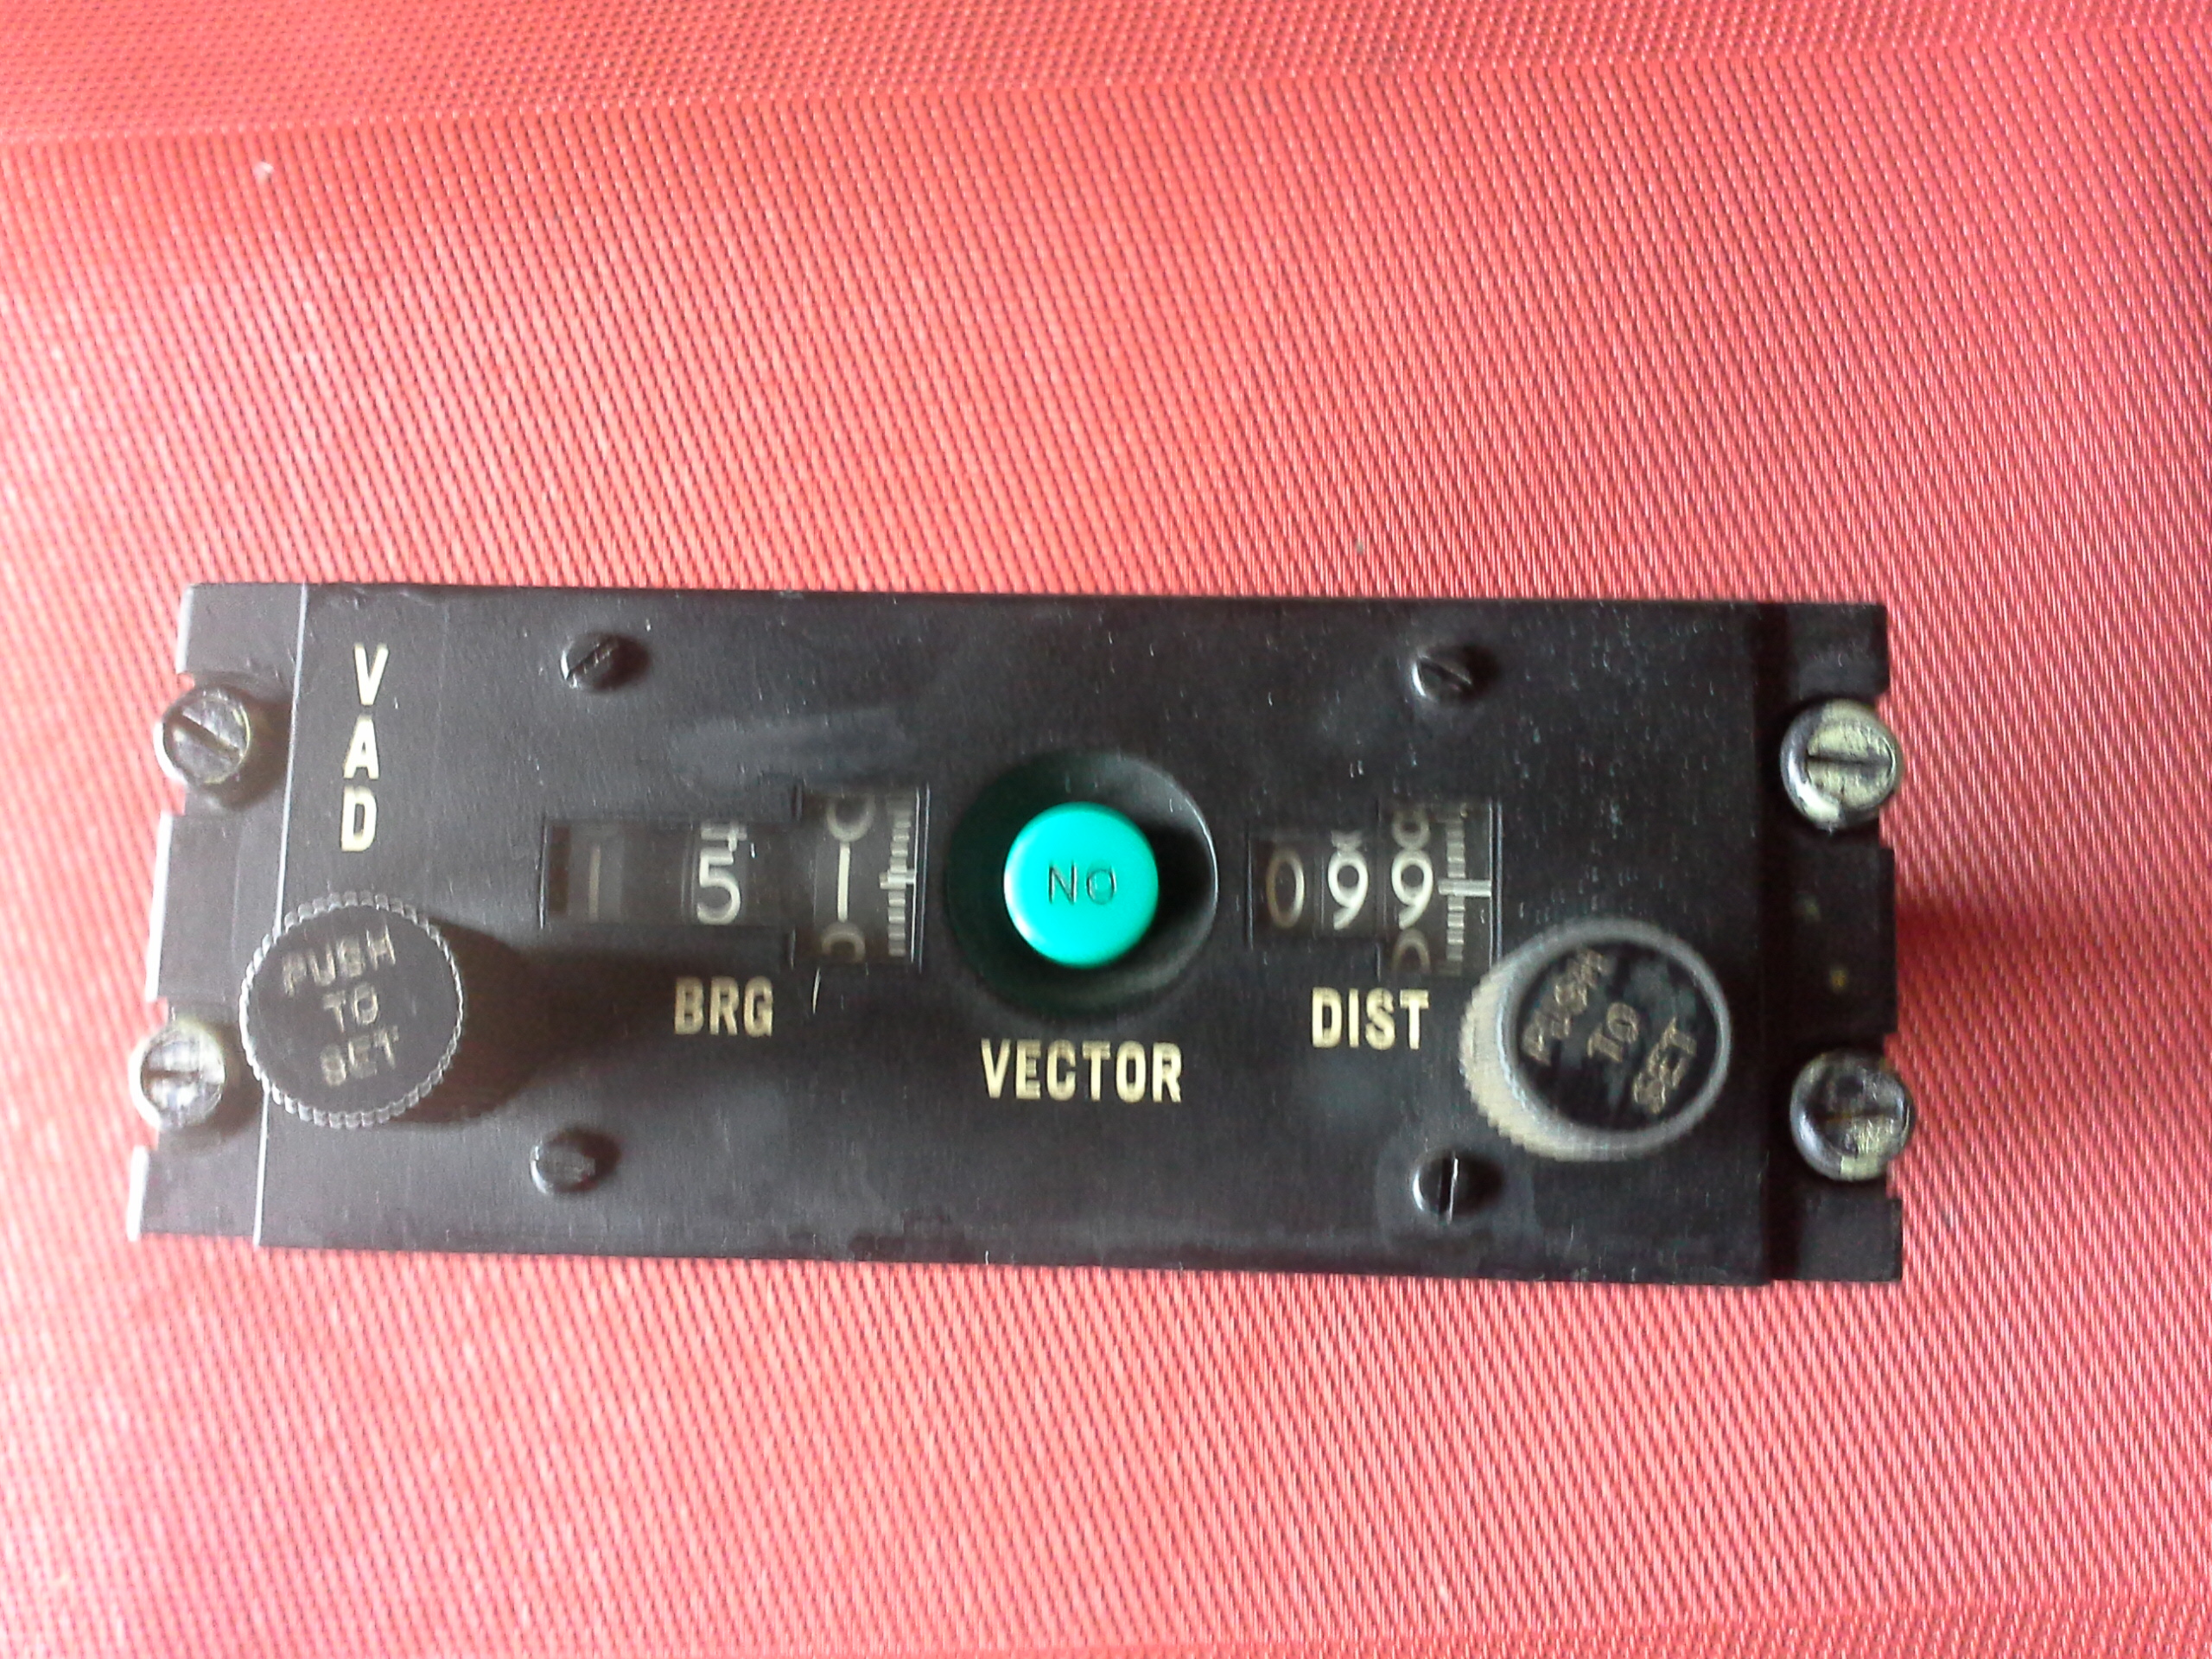 Vektor Additionsgerät, Vario-2, Eingabe für Navigation, Flugzeug, Transall C-160